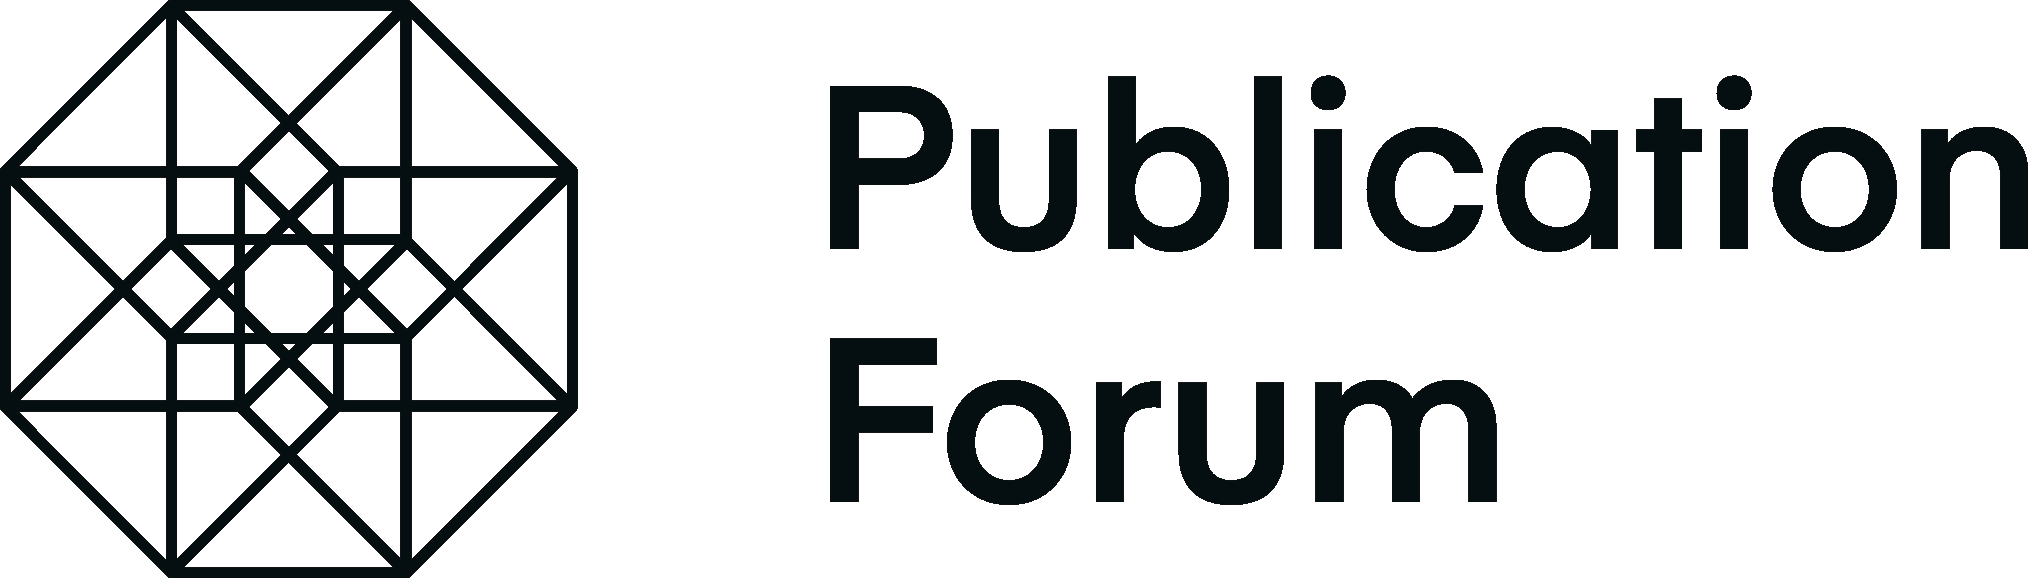 Publication forum logo.